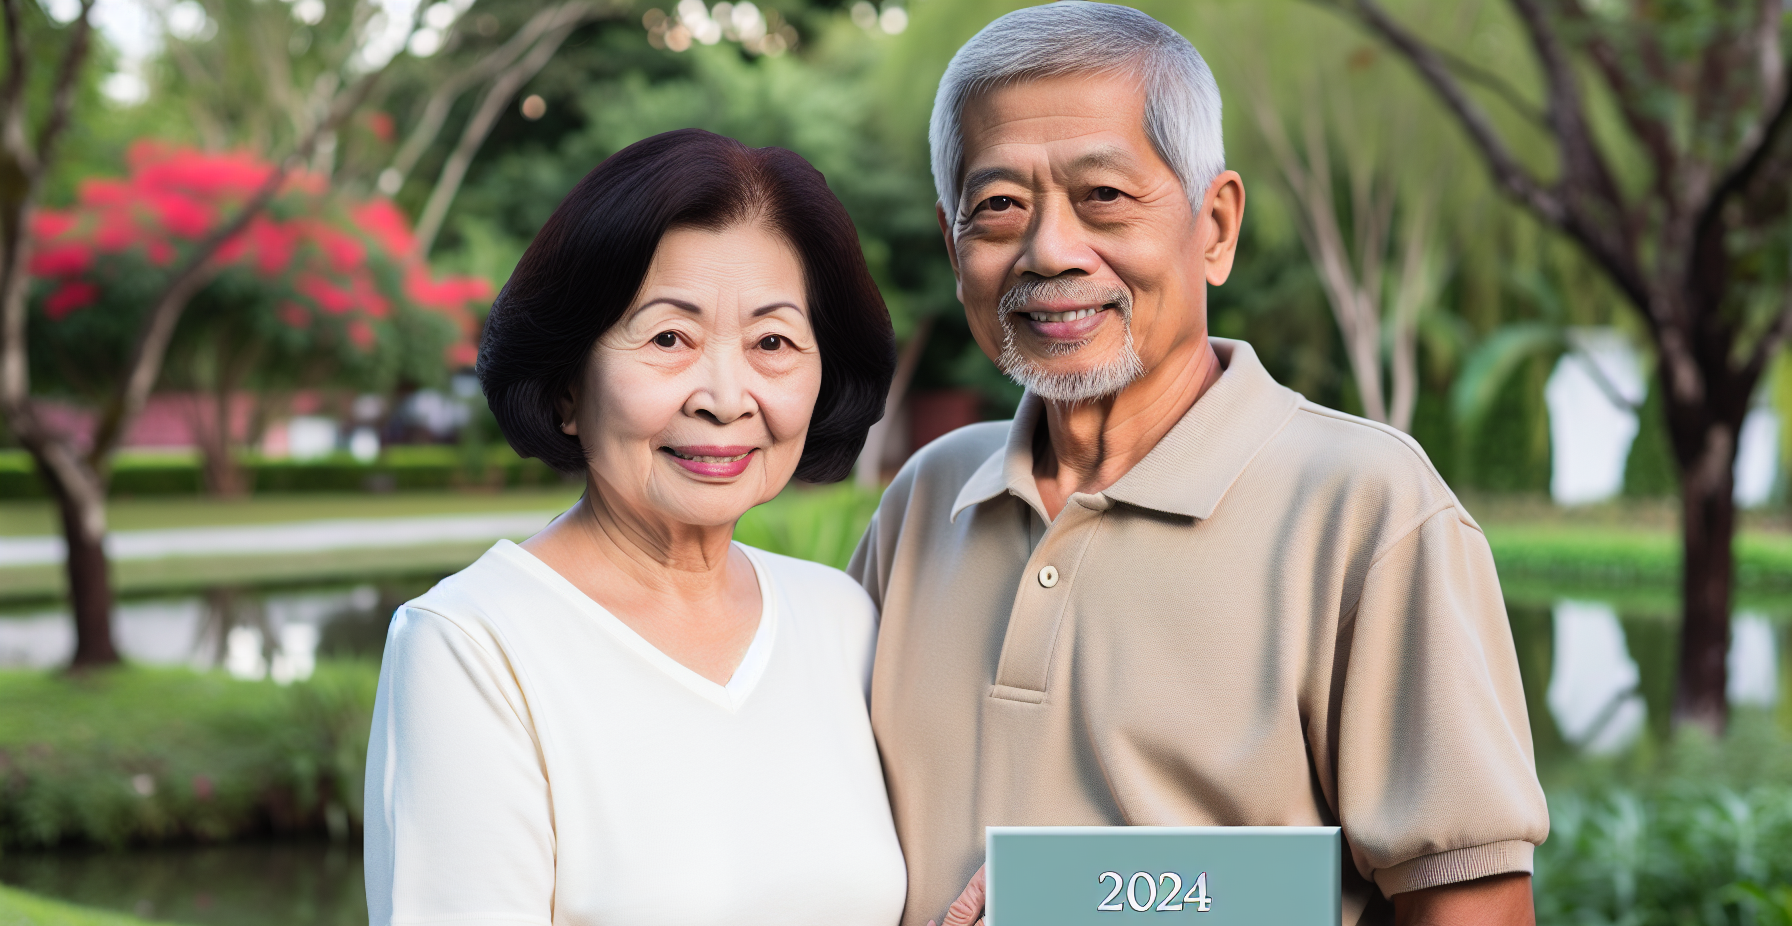 2024 Preparedness Calendar. An older couple stands together 